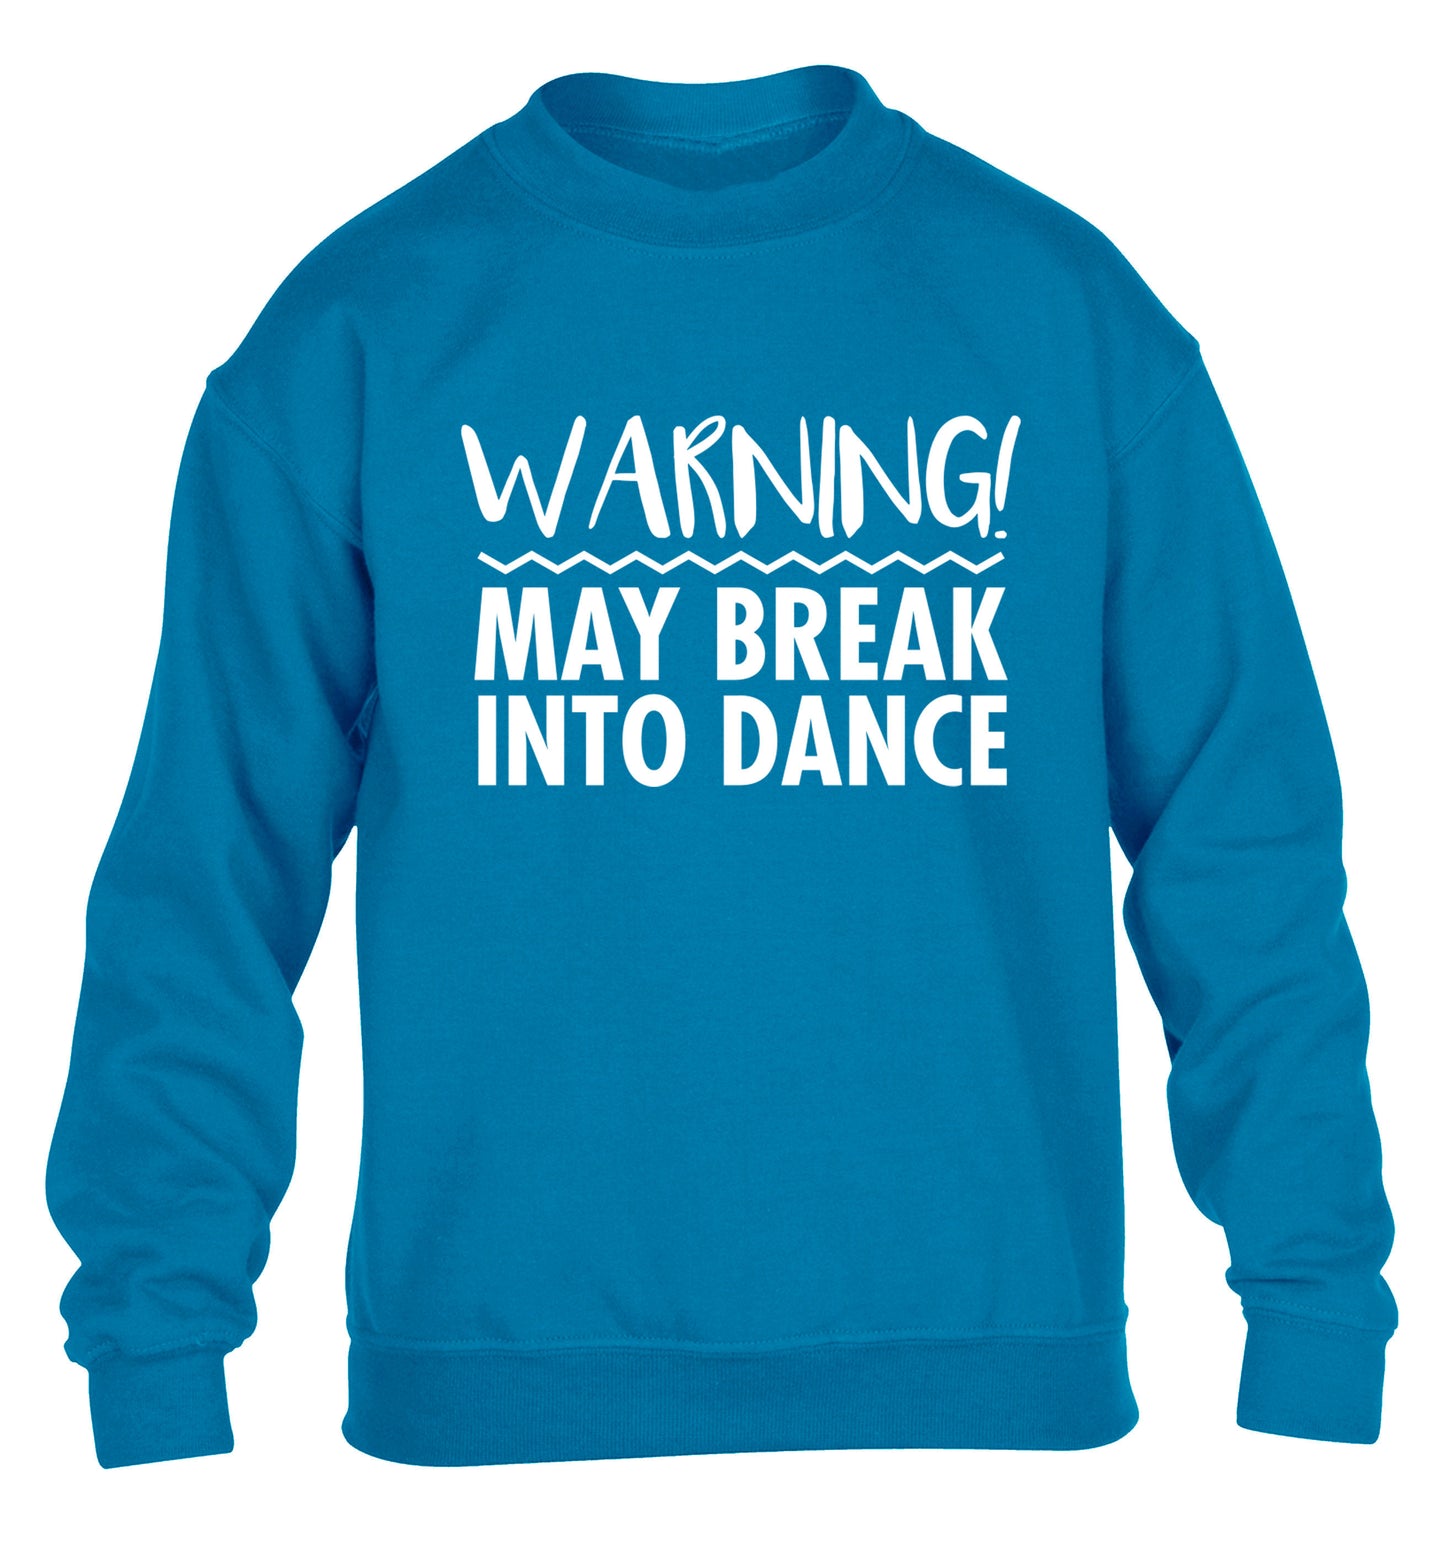 Warning may break into dance children's blue sweater 12-14 Years